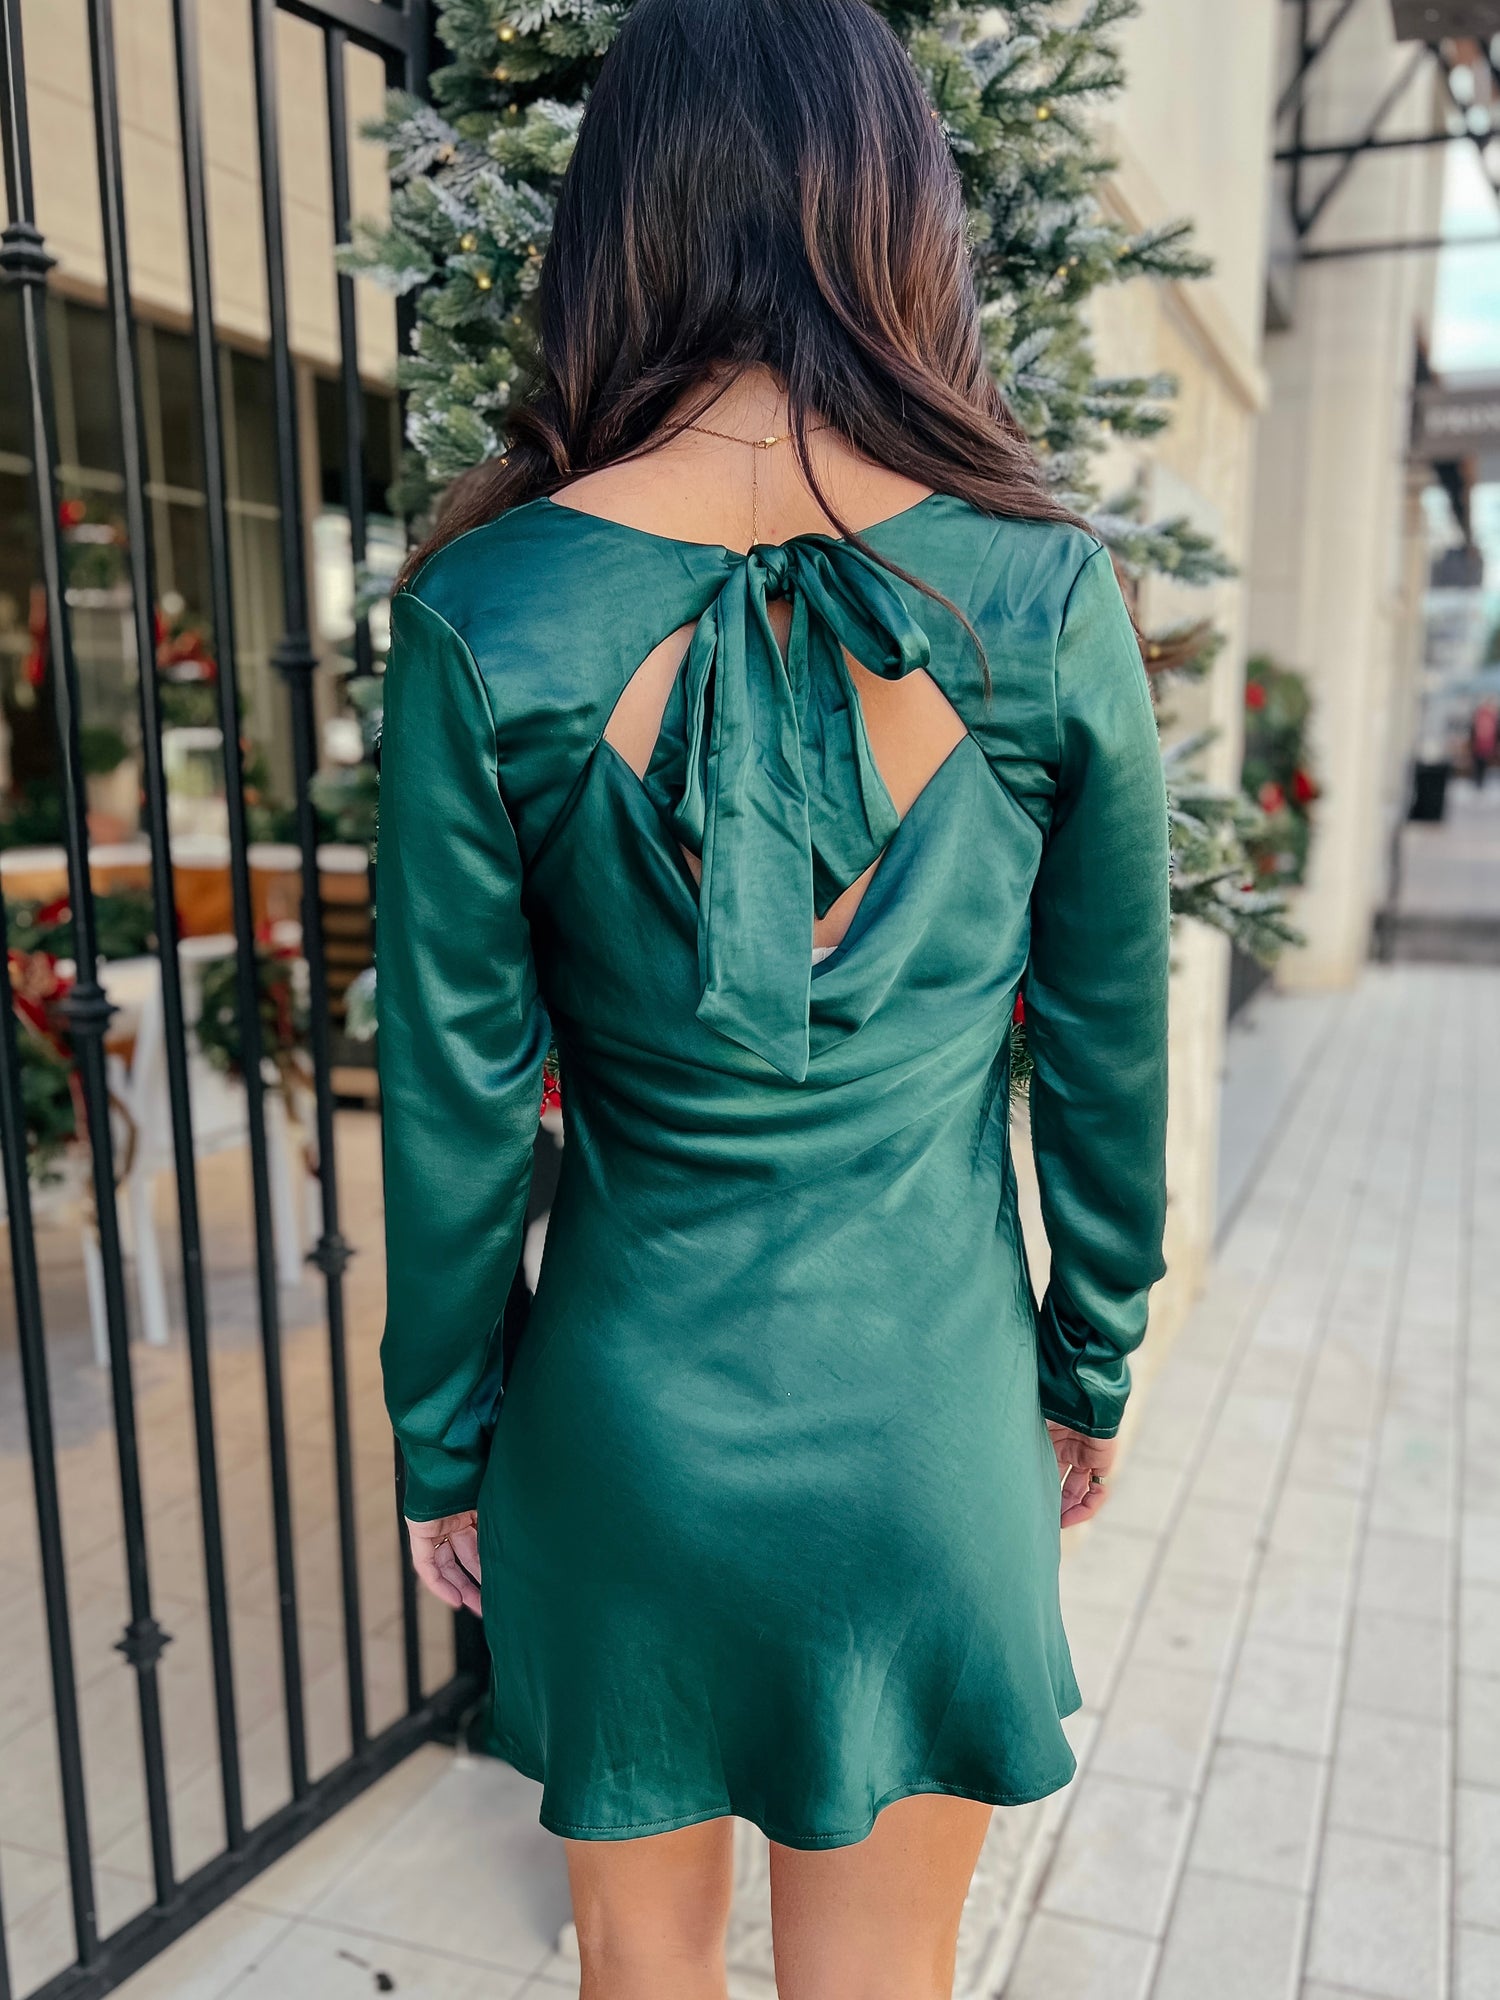 Carolina Herrera Back Bow V-Neck Silk Gown | Fashion outfits, Fashion  dresses, Couture fashion